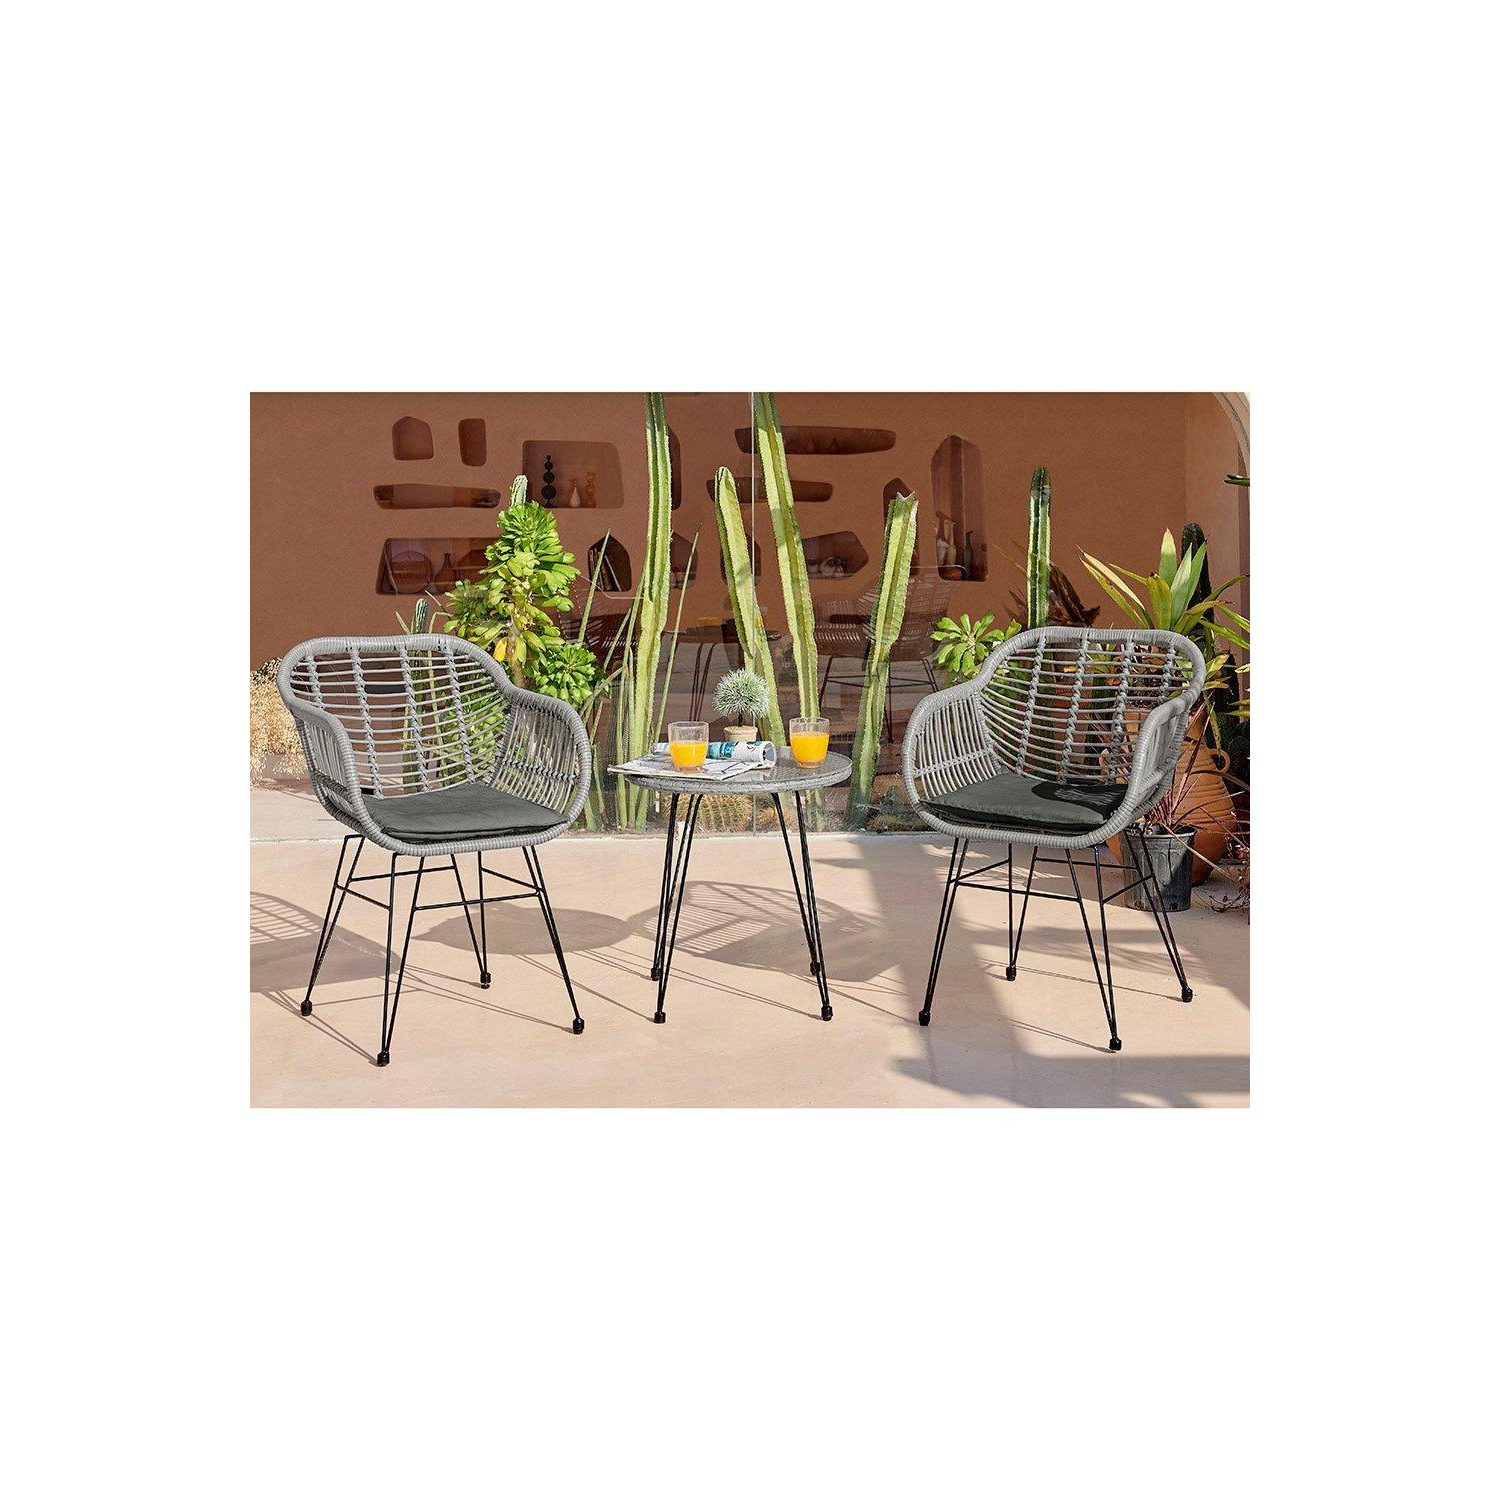 Belize Wicker Style PE Rattan 2 Seat Outdoor Garden Bistro Table & Chairs Set, black metal hairpin legs - image 1